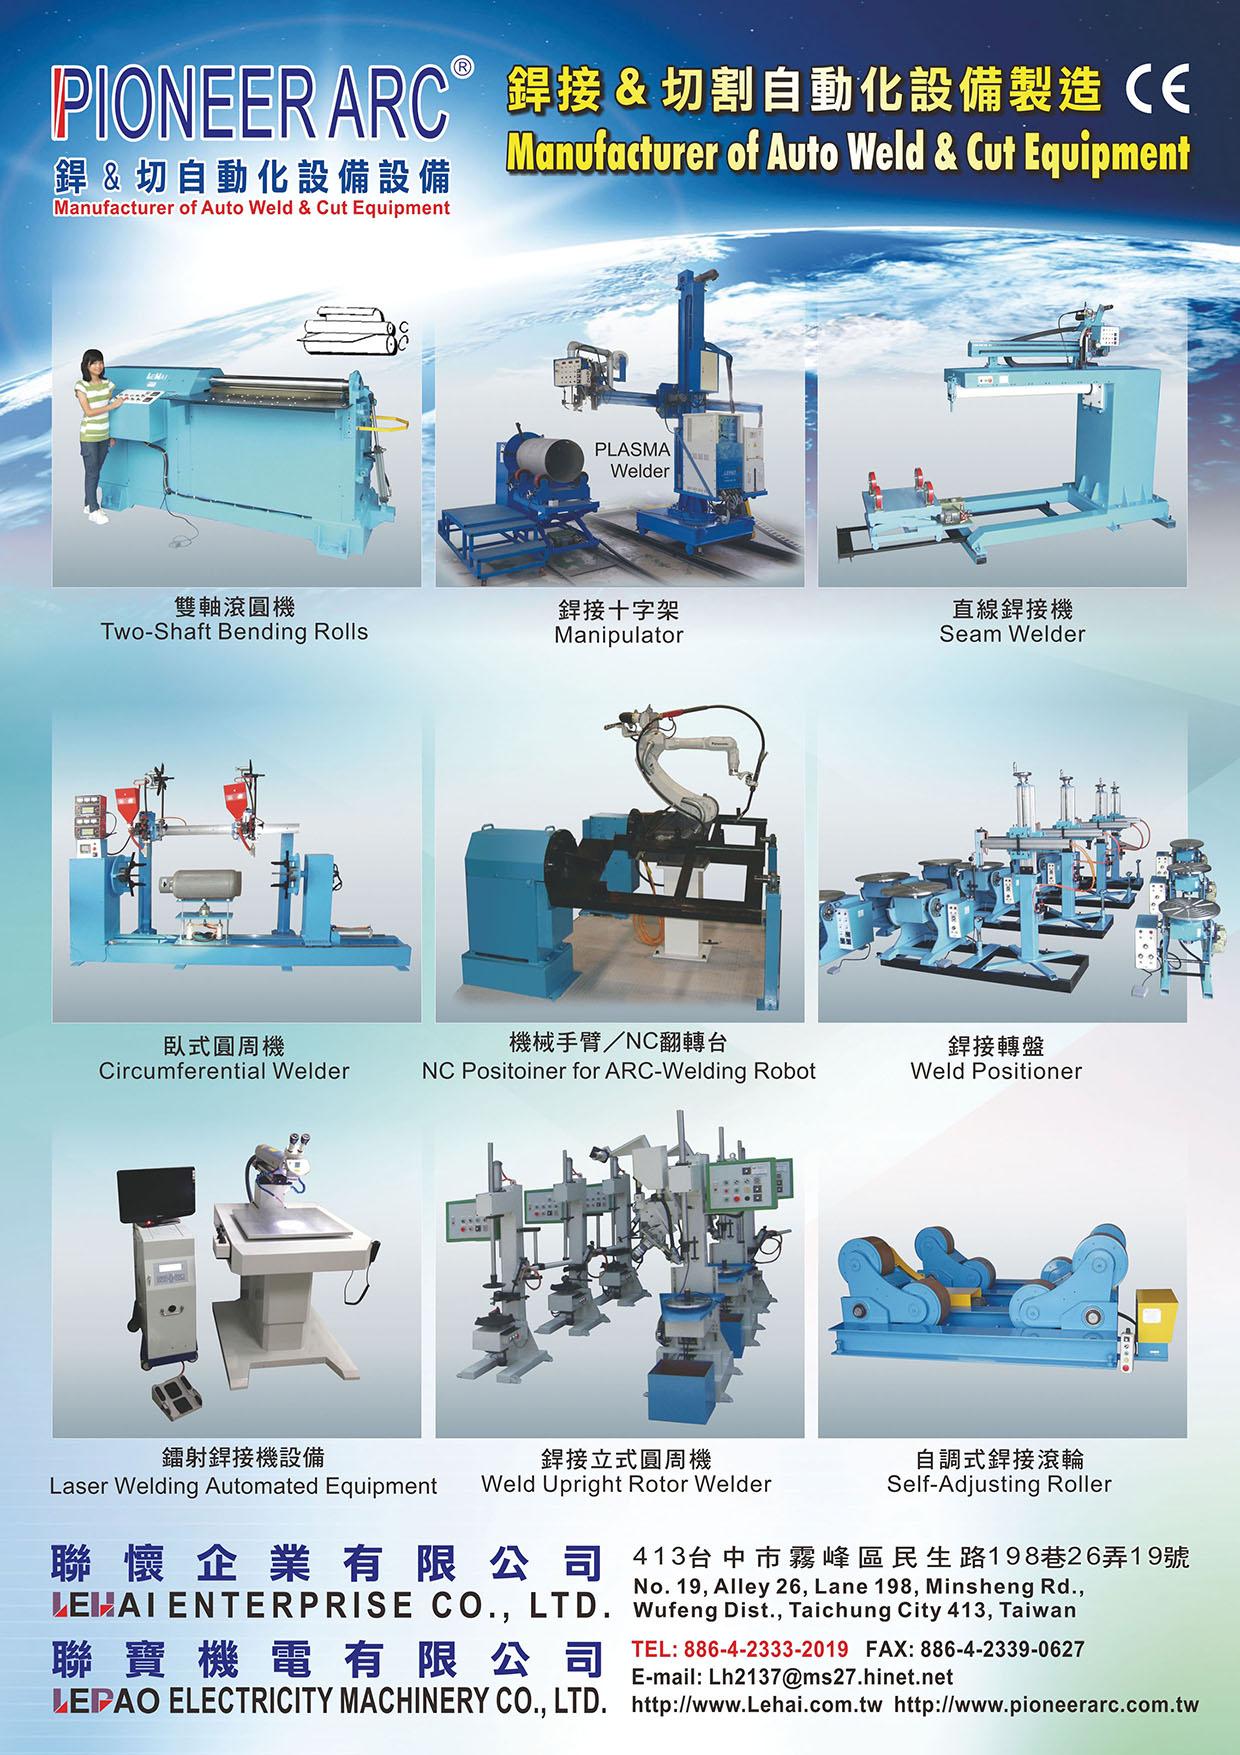 Manufacturer of Auto Weld & Cut Equipment-銲接&切割自動化設備製造(Manufacturer of Auto Weld & Cut Equipment)